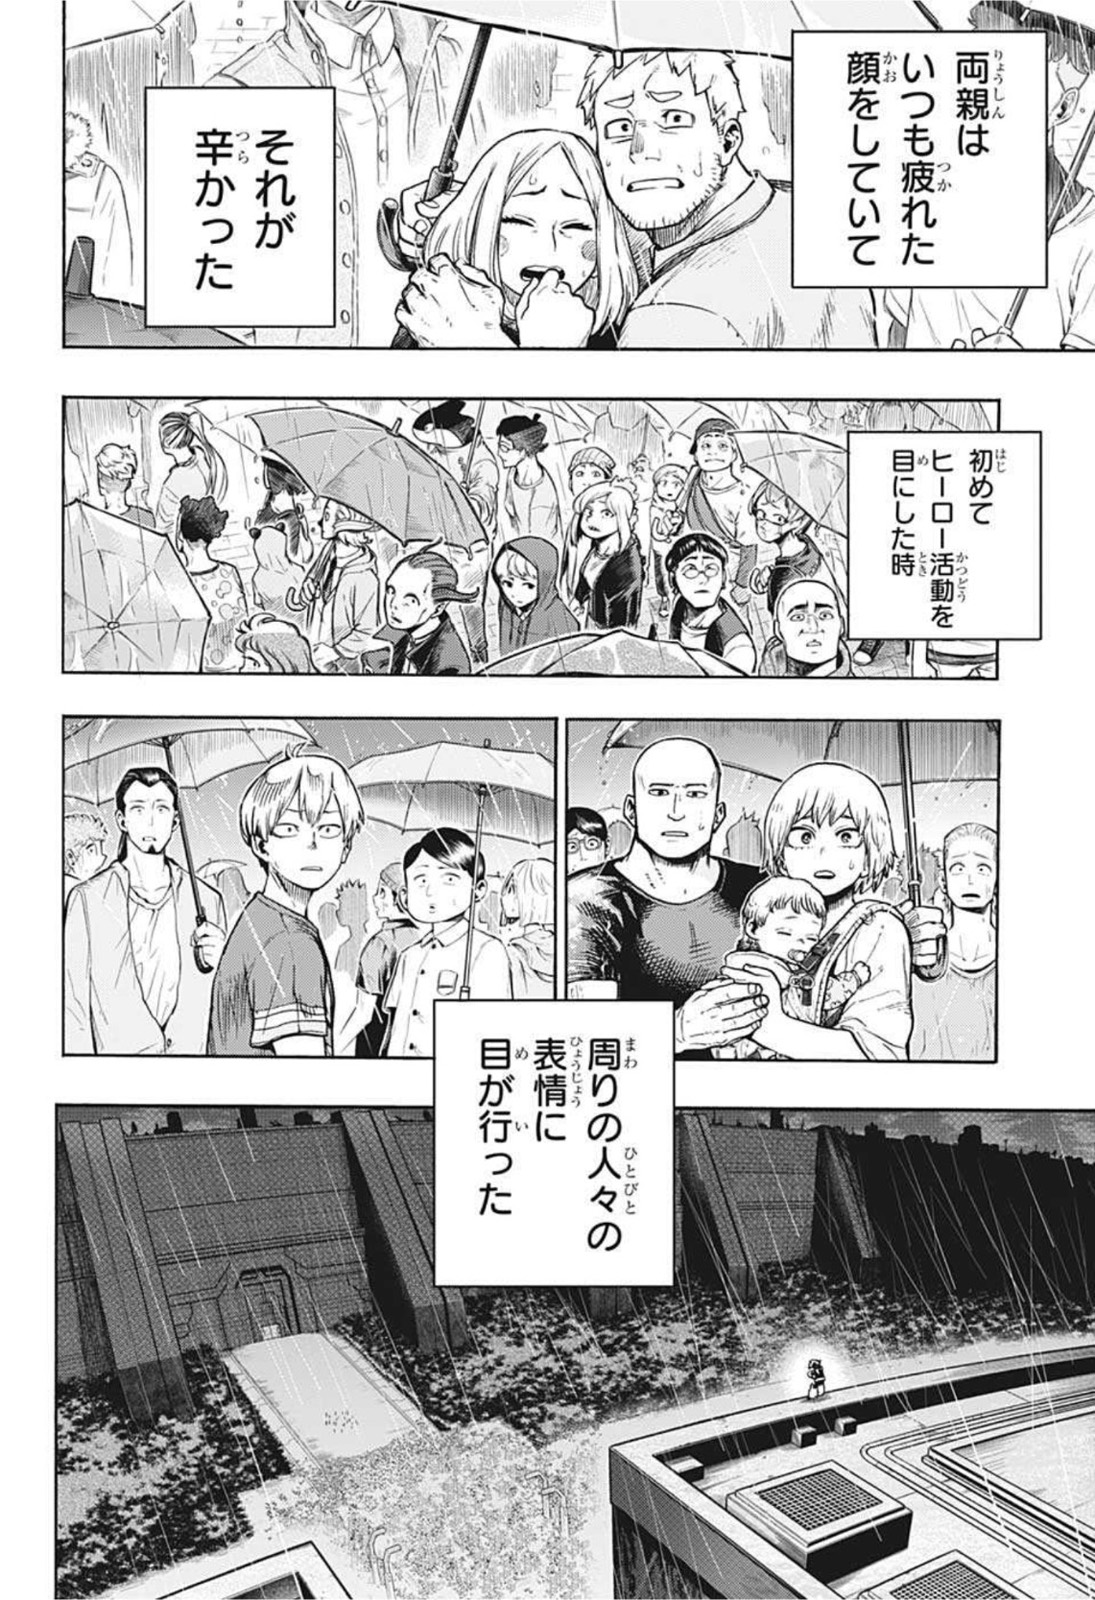 Boku no Hero Academia - Chapter 324 - Page 2